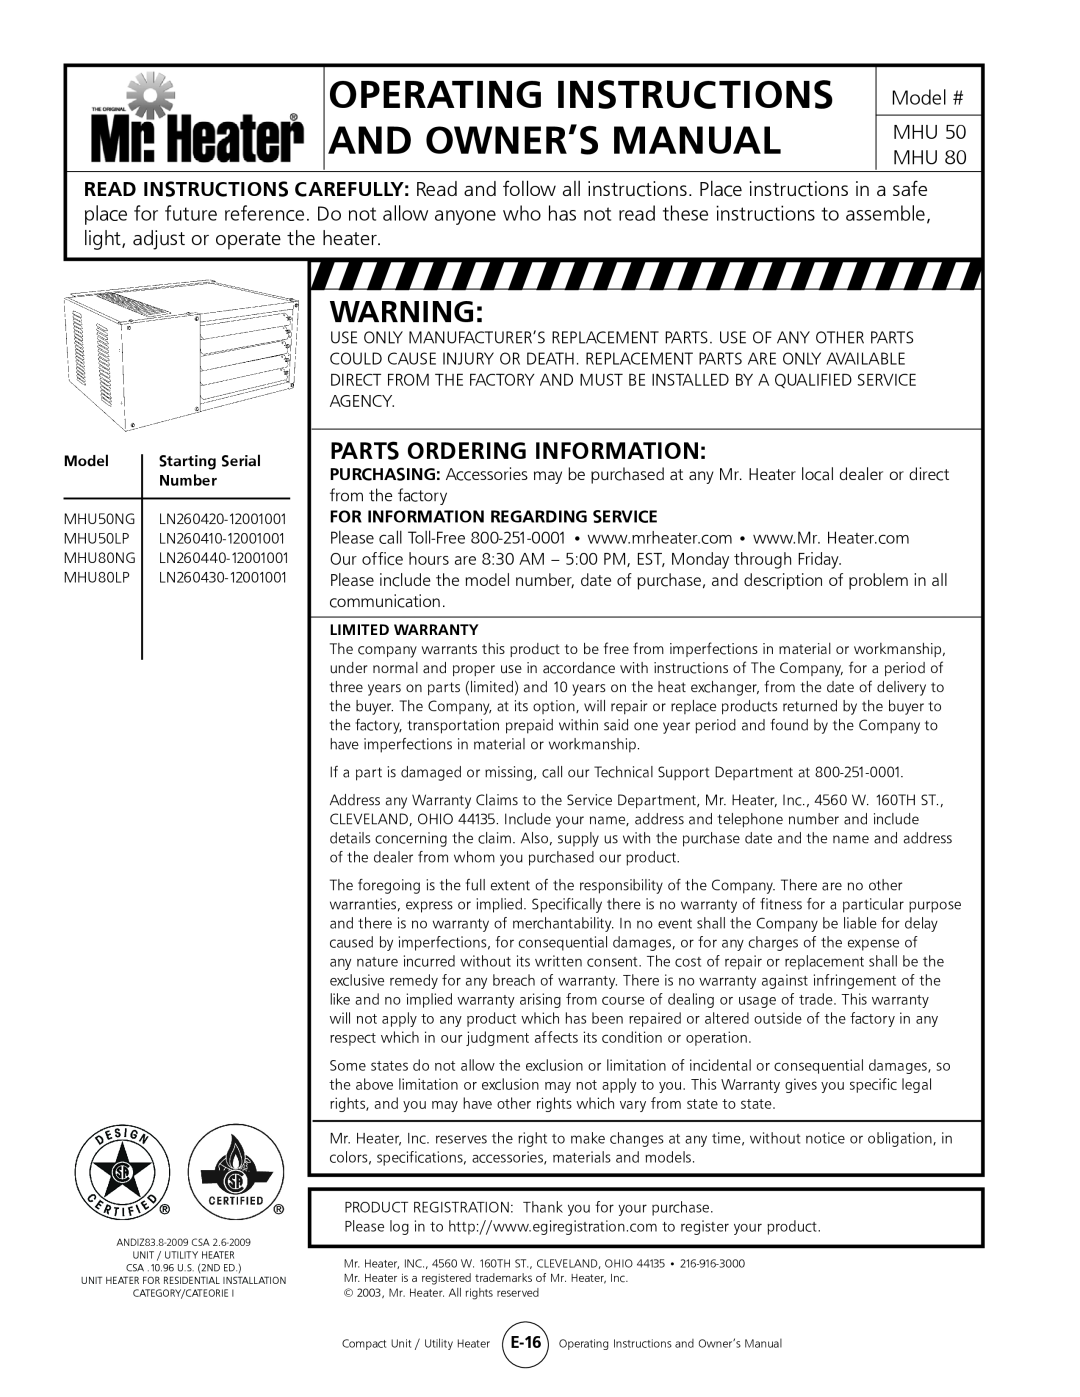 Mr. Heater MHU 80 owner manual Parts Ordering Information, Model # MHU 50 MHU, For Information Regarding Service 